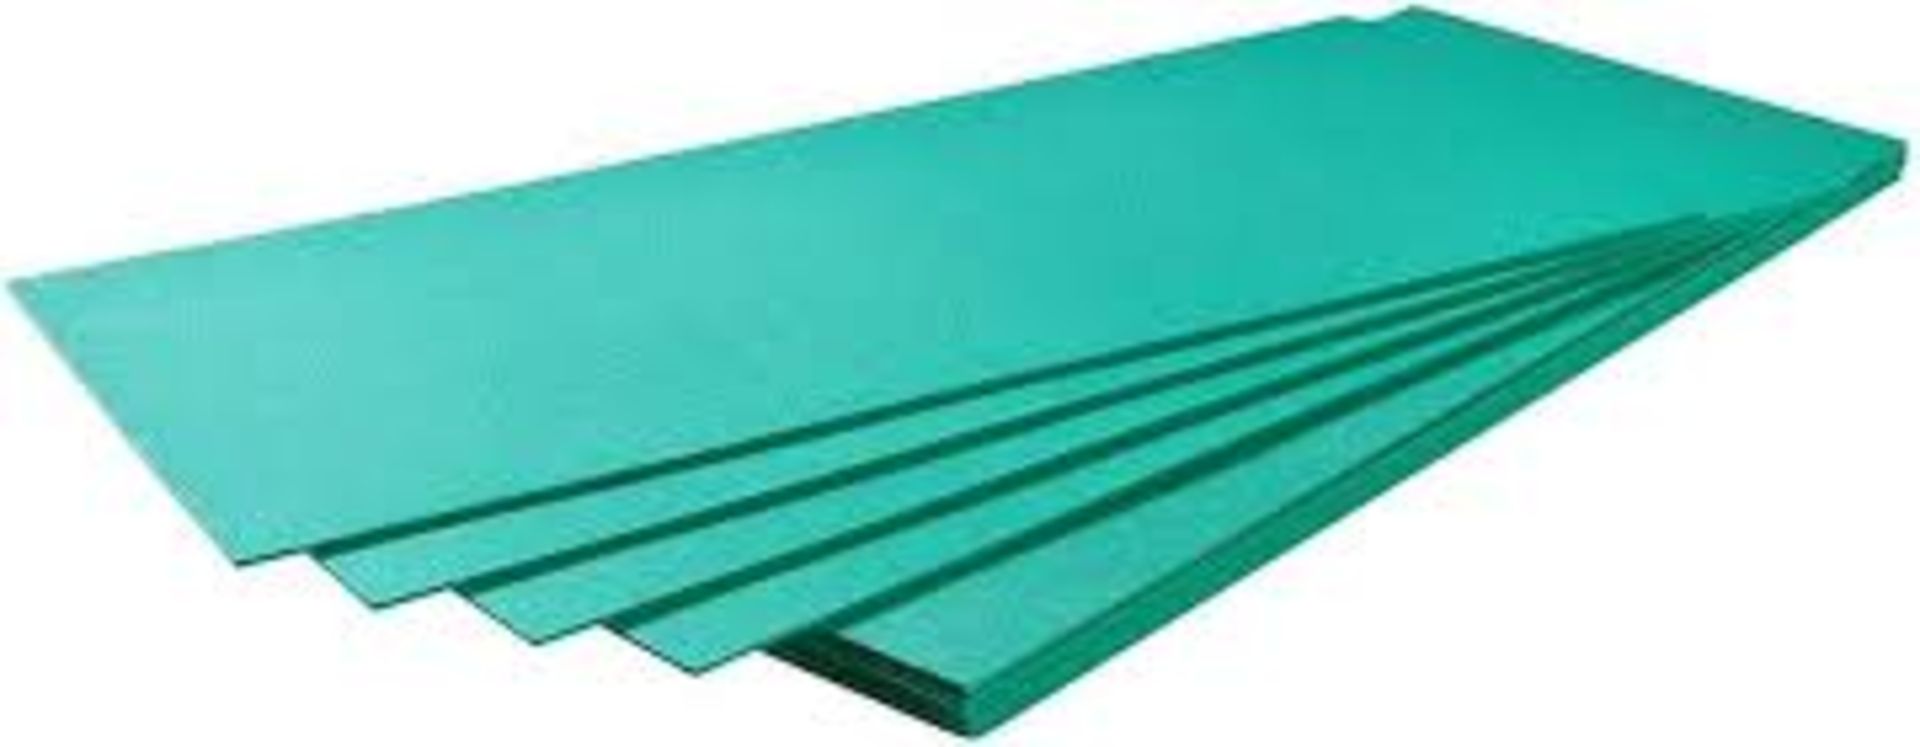 16 x Izo Panel Underlay Flooring 5m2 per packet. - ER50